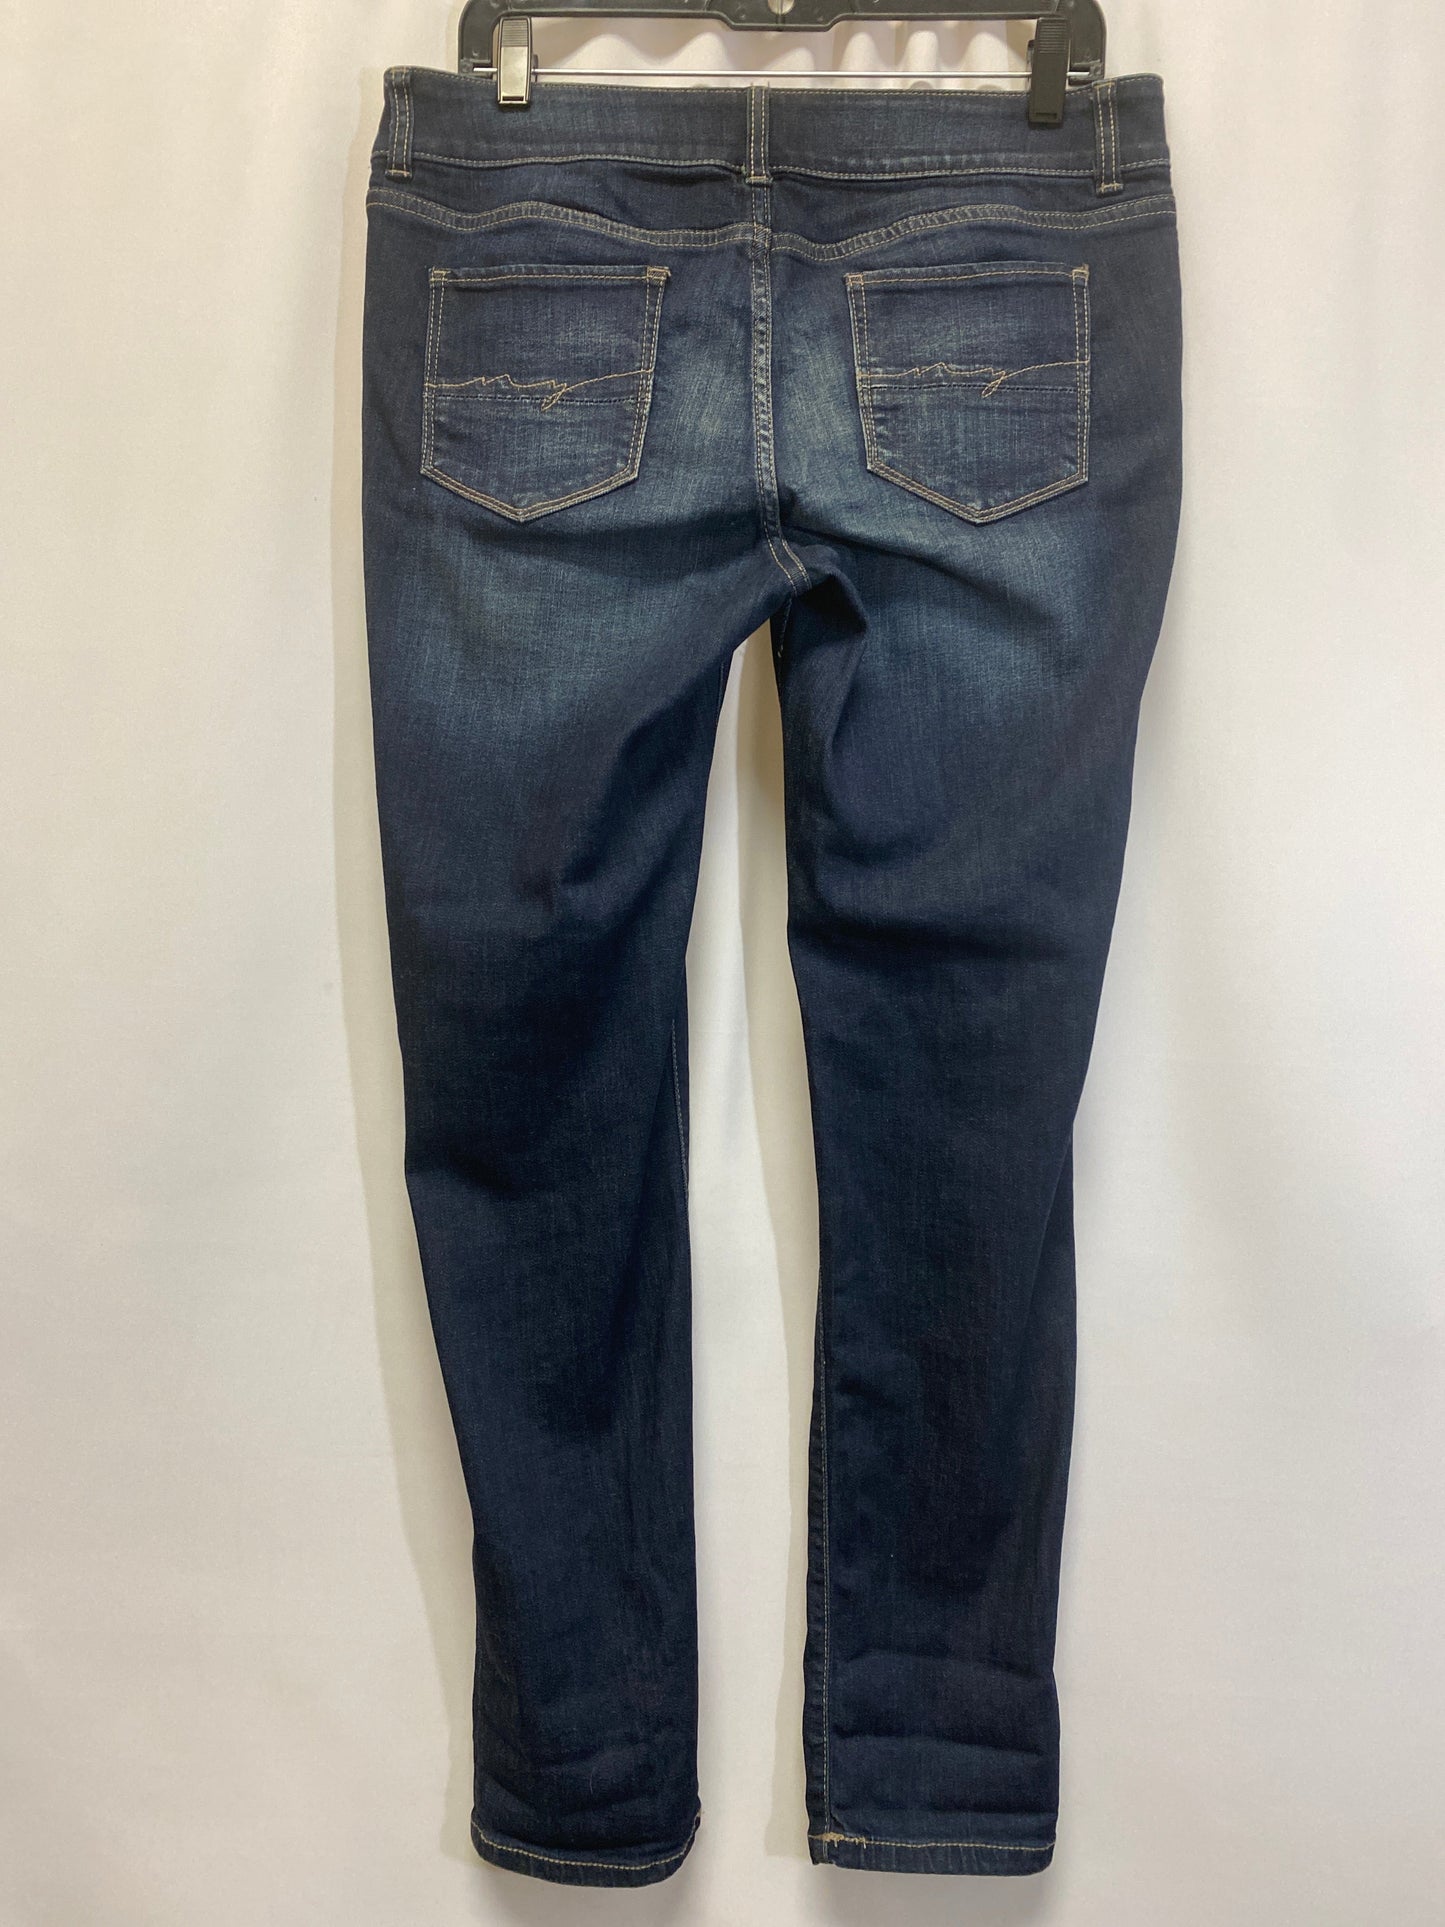 Blue Denim Jeans Boyfriend New York And Co, Size 8